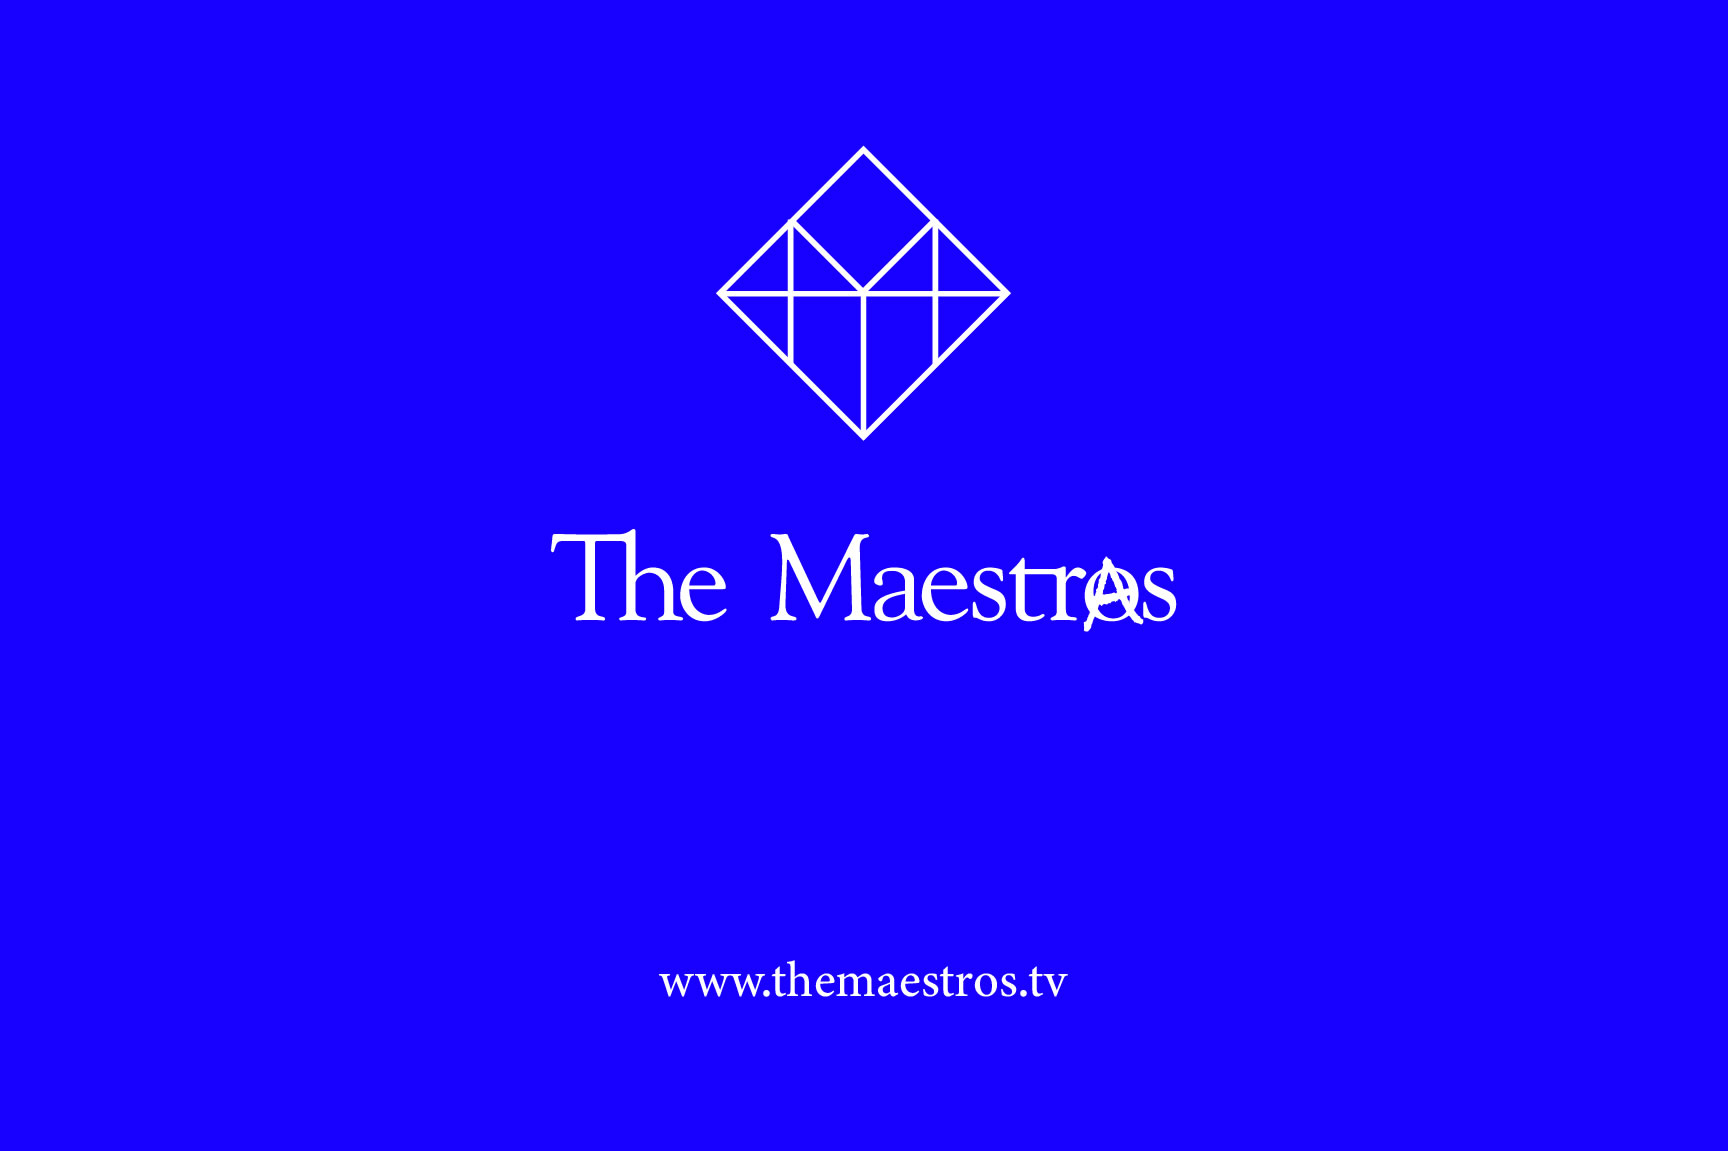 The Maestros/TheJuju